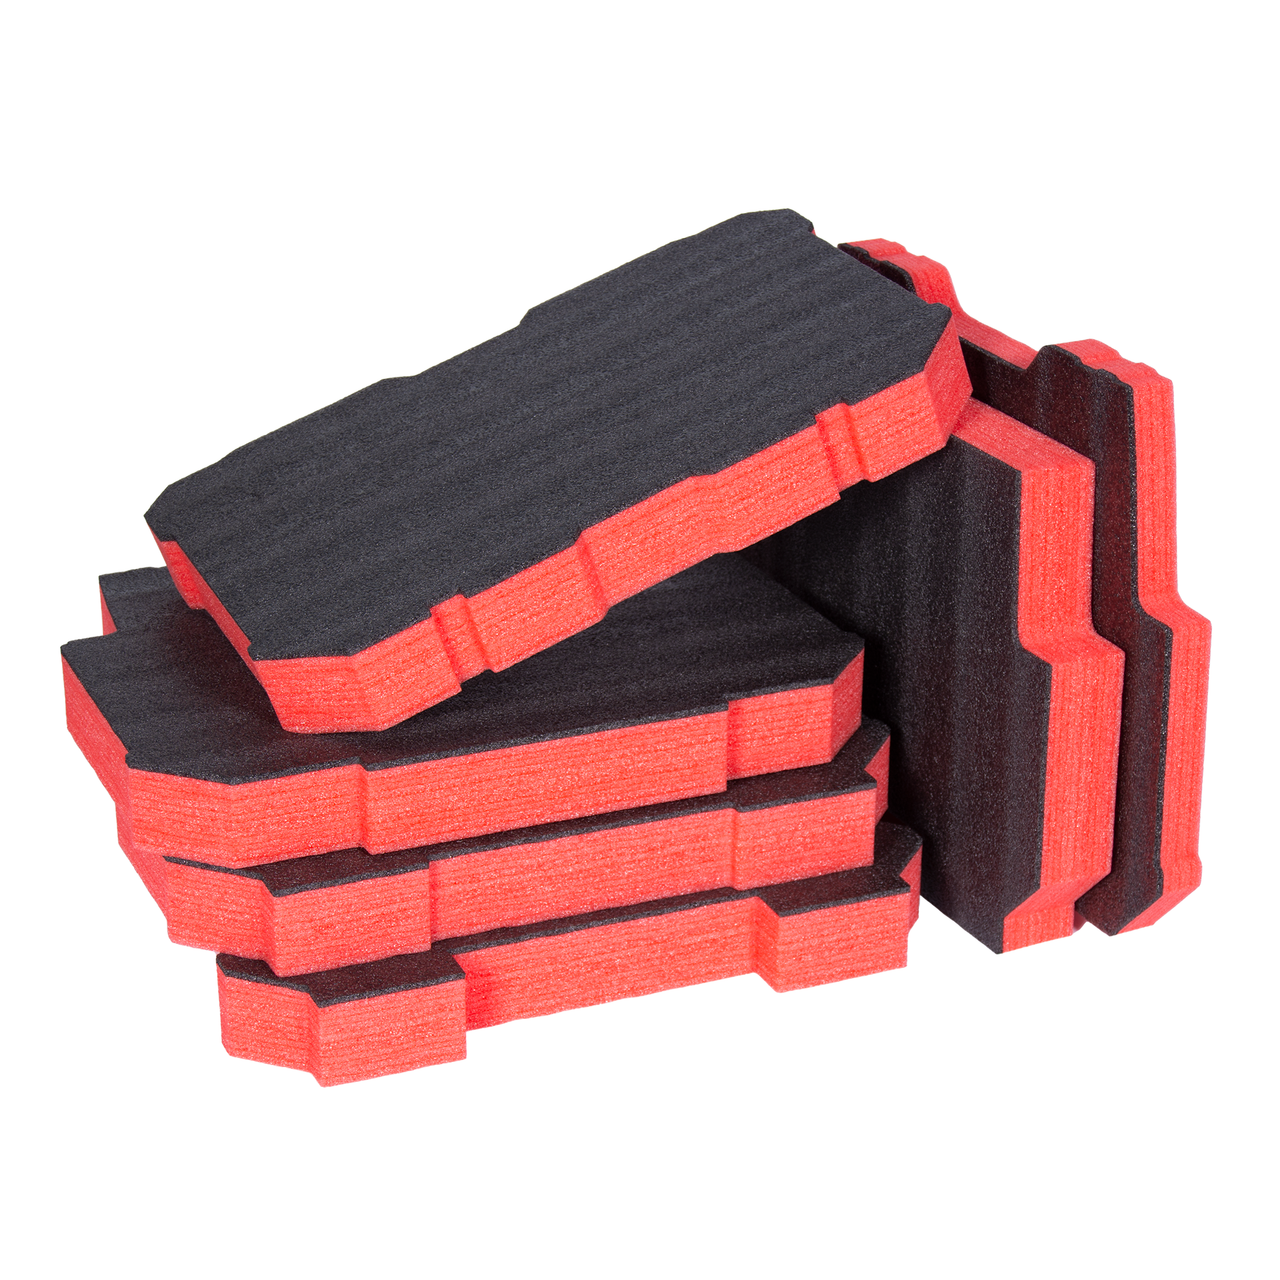 Milwaukee Packout ™ Econo Foam Inserts- Fits 48-22-8426 (6 Piece Foam Kit)